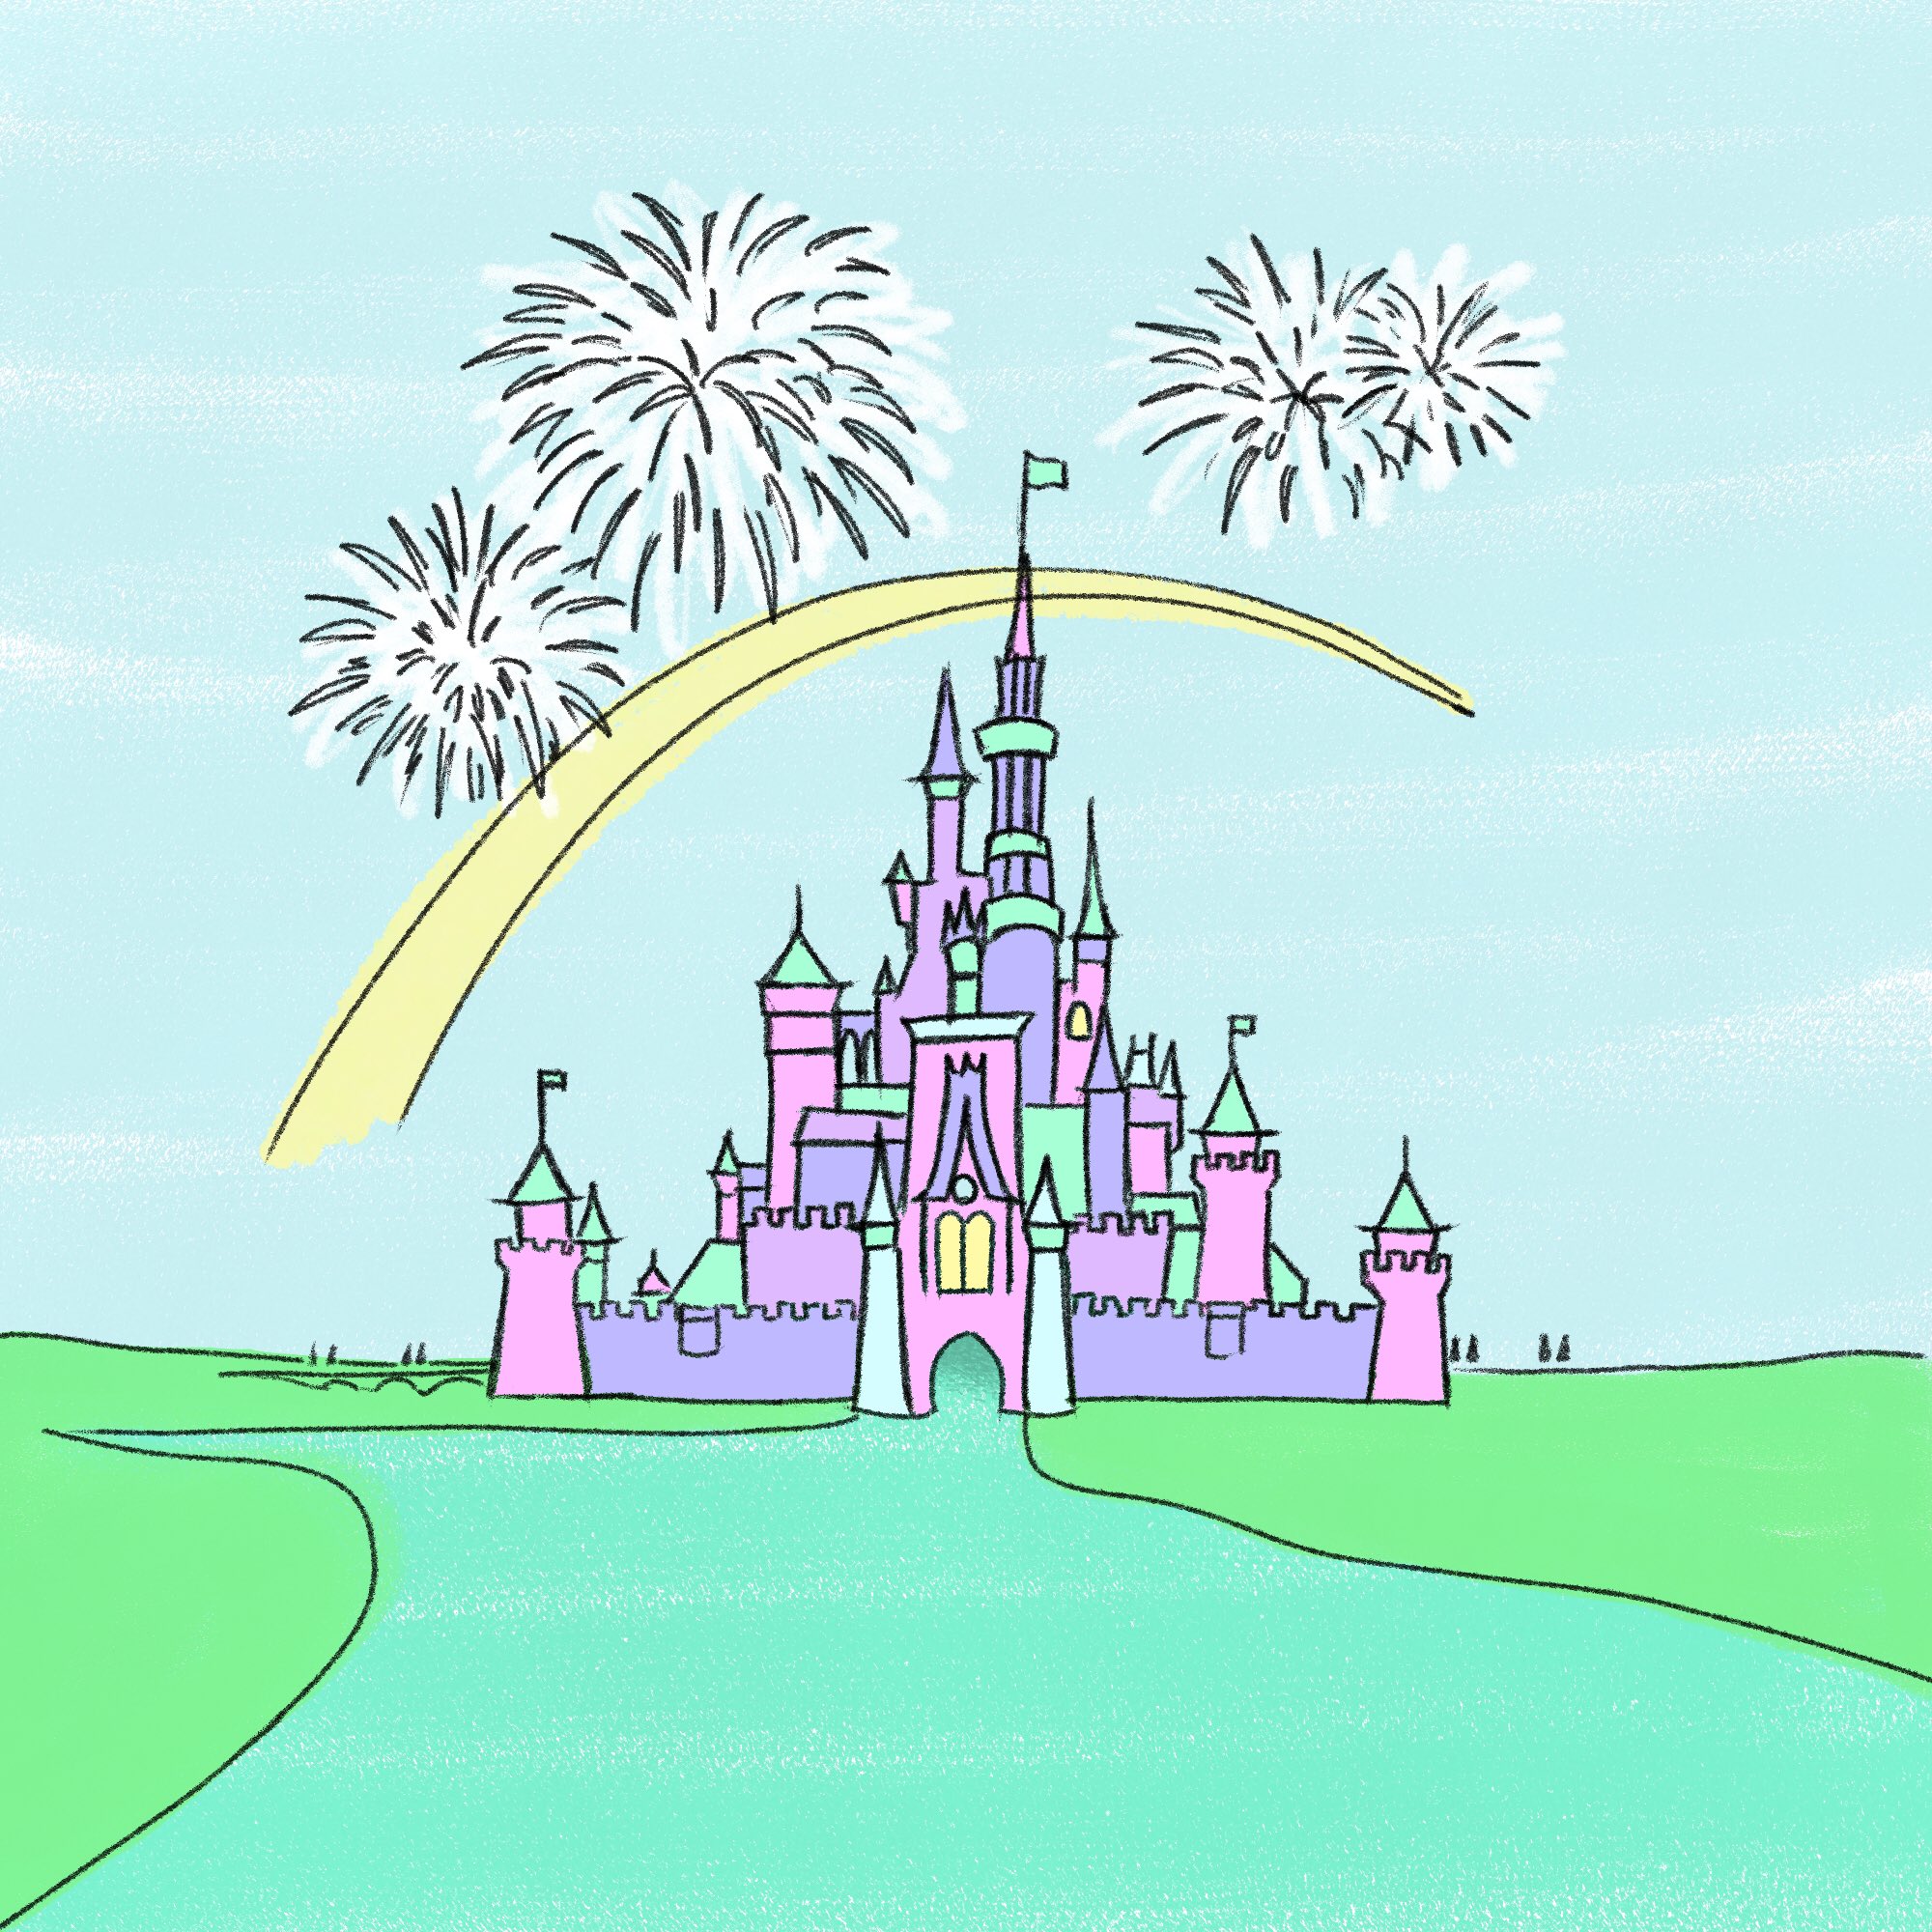 Arisa ディズニー映画オープニングロゴ Disney Disneycastle シンデレラ城 Illustration Drawing イラスト T Co F7cxcik4m9 Twitter